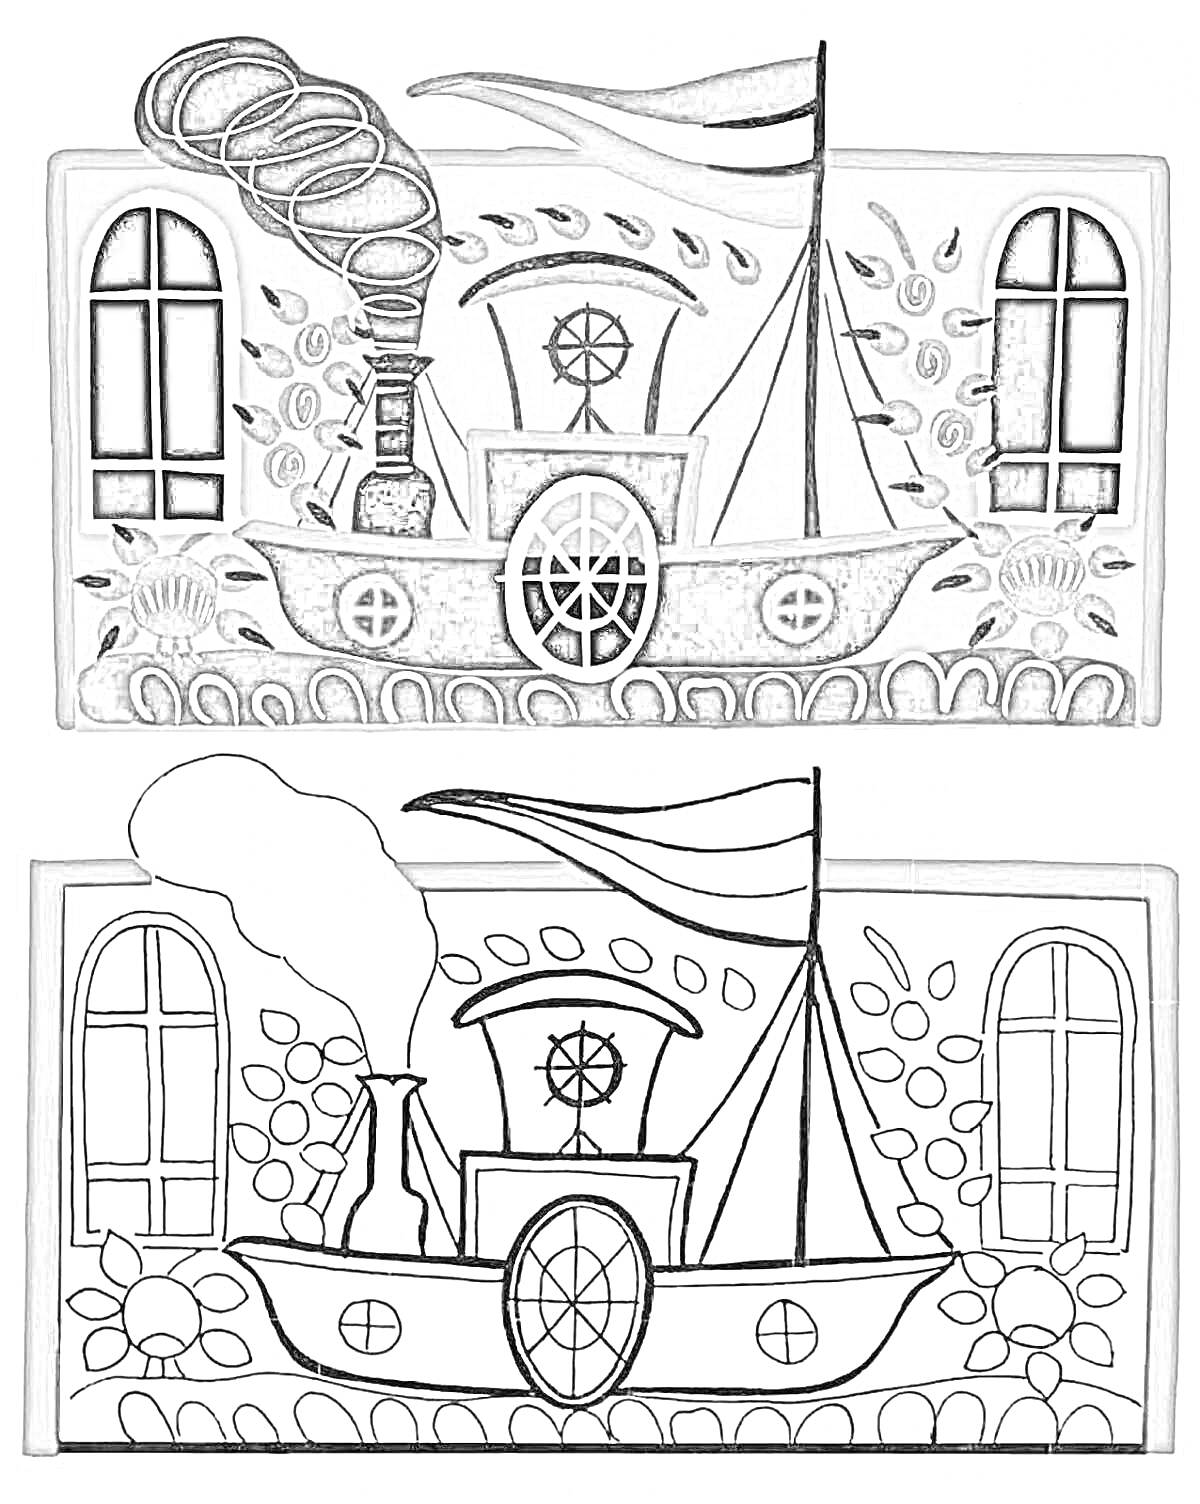 На раскраске изображено: Пароход, Река, Окна, Флаг, Дым, Цветы, Декоративные элементы